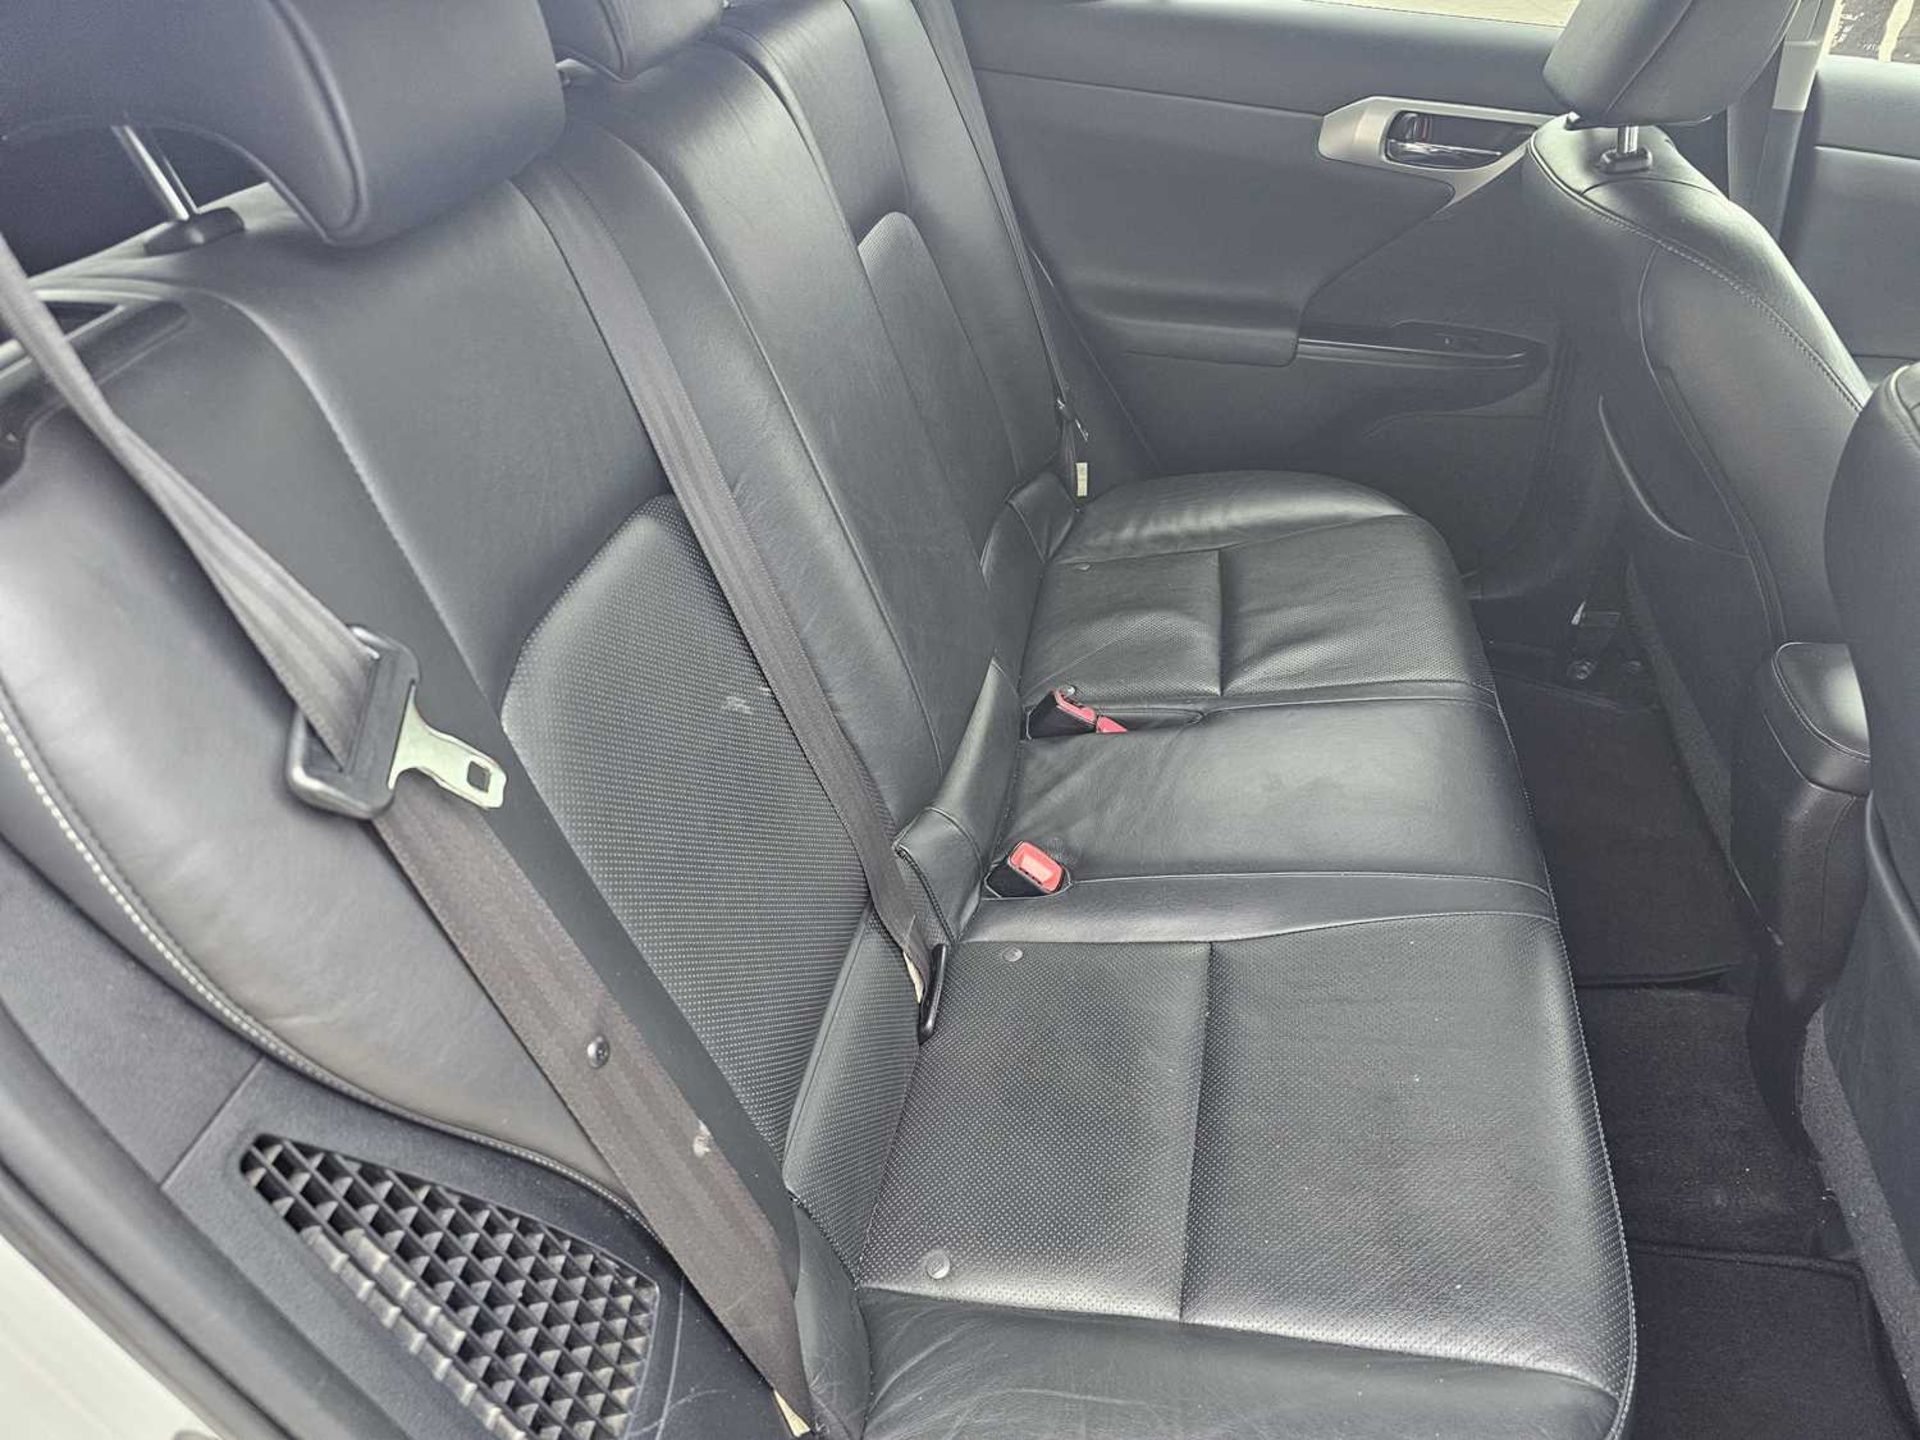 2011 Lexus CT200H Se-L Cvt Hybrid, Auto, Full Leather, Heated Seats, Bluetooth (NO VAT)(Reg. Docs. A - Image 17 of 26